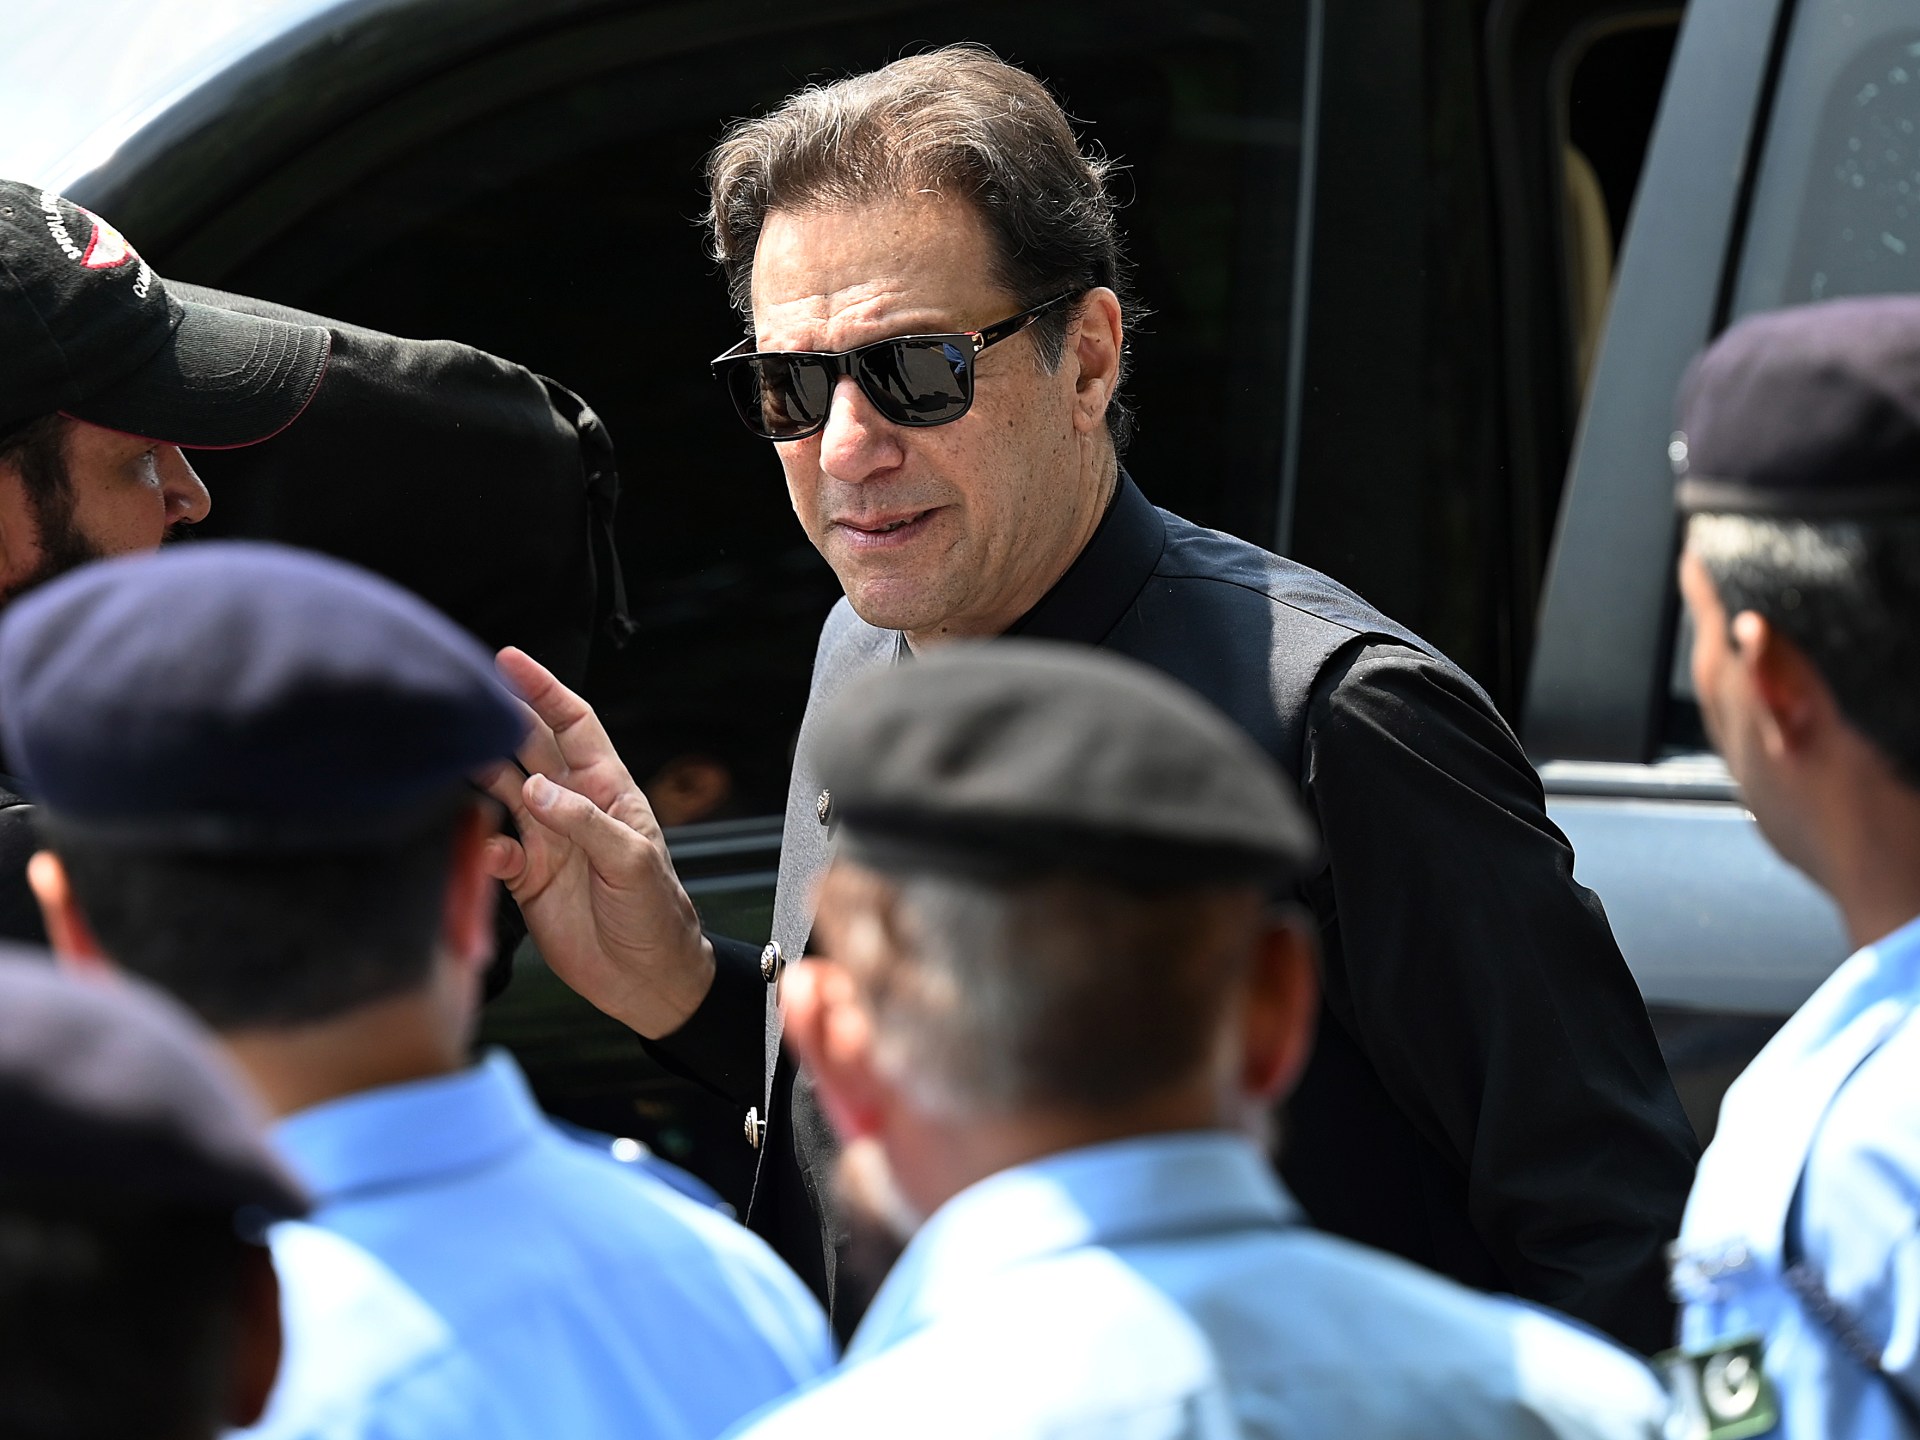 Pakistan’s Imran Khan gets bail in state secrets case ahead of key election | Imran Khan News